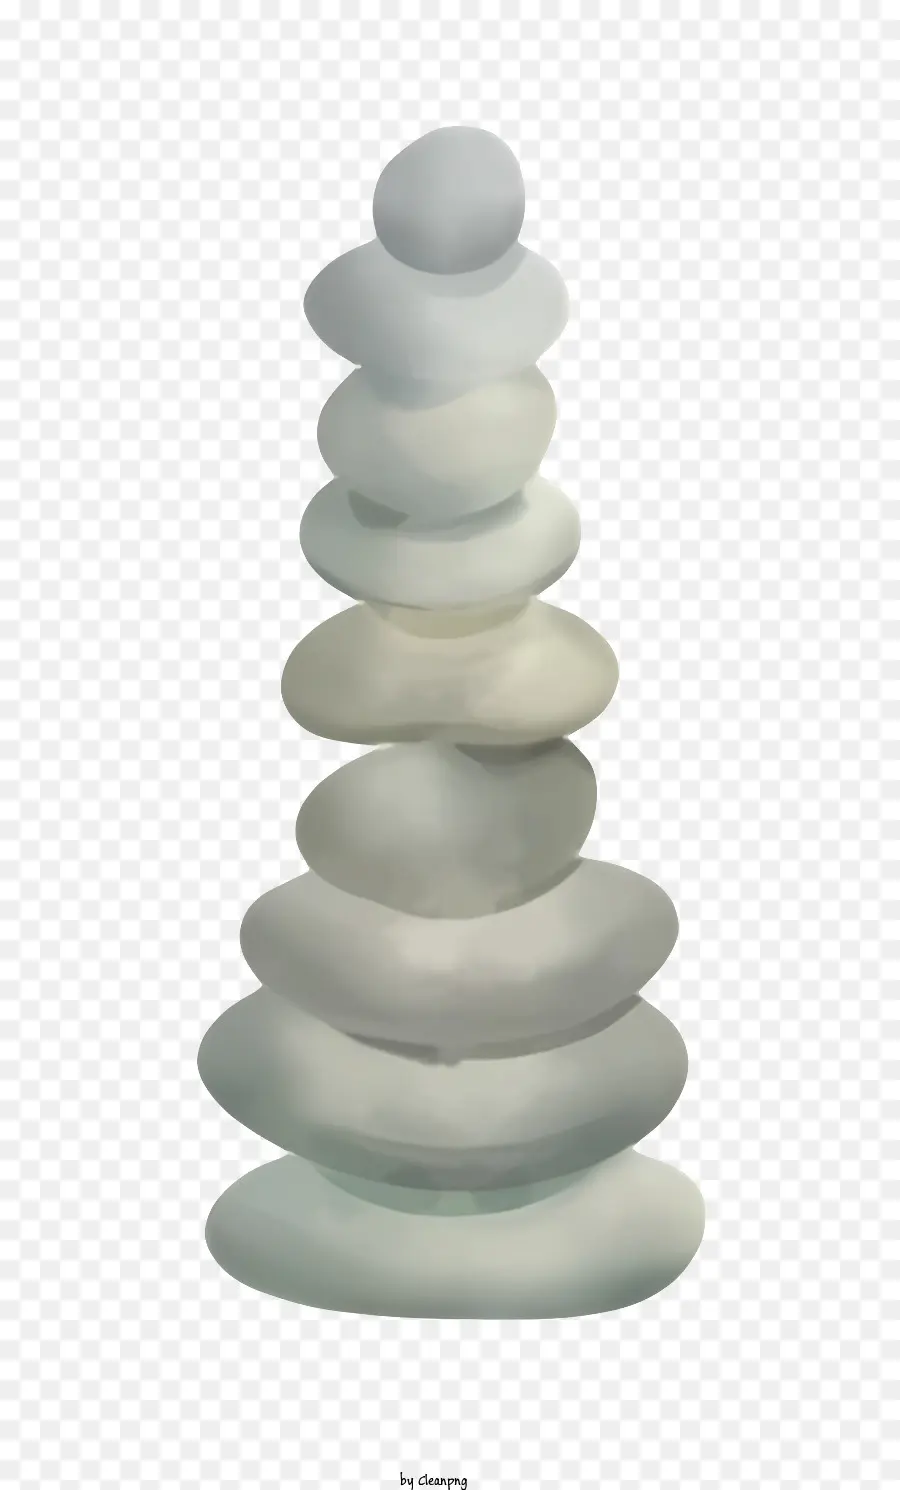 stone stacking zen art balanced stones stone sculptures nature decorations